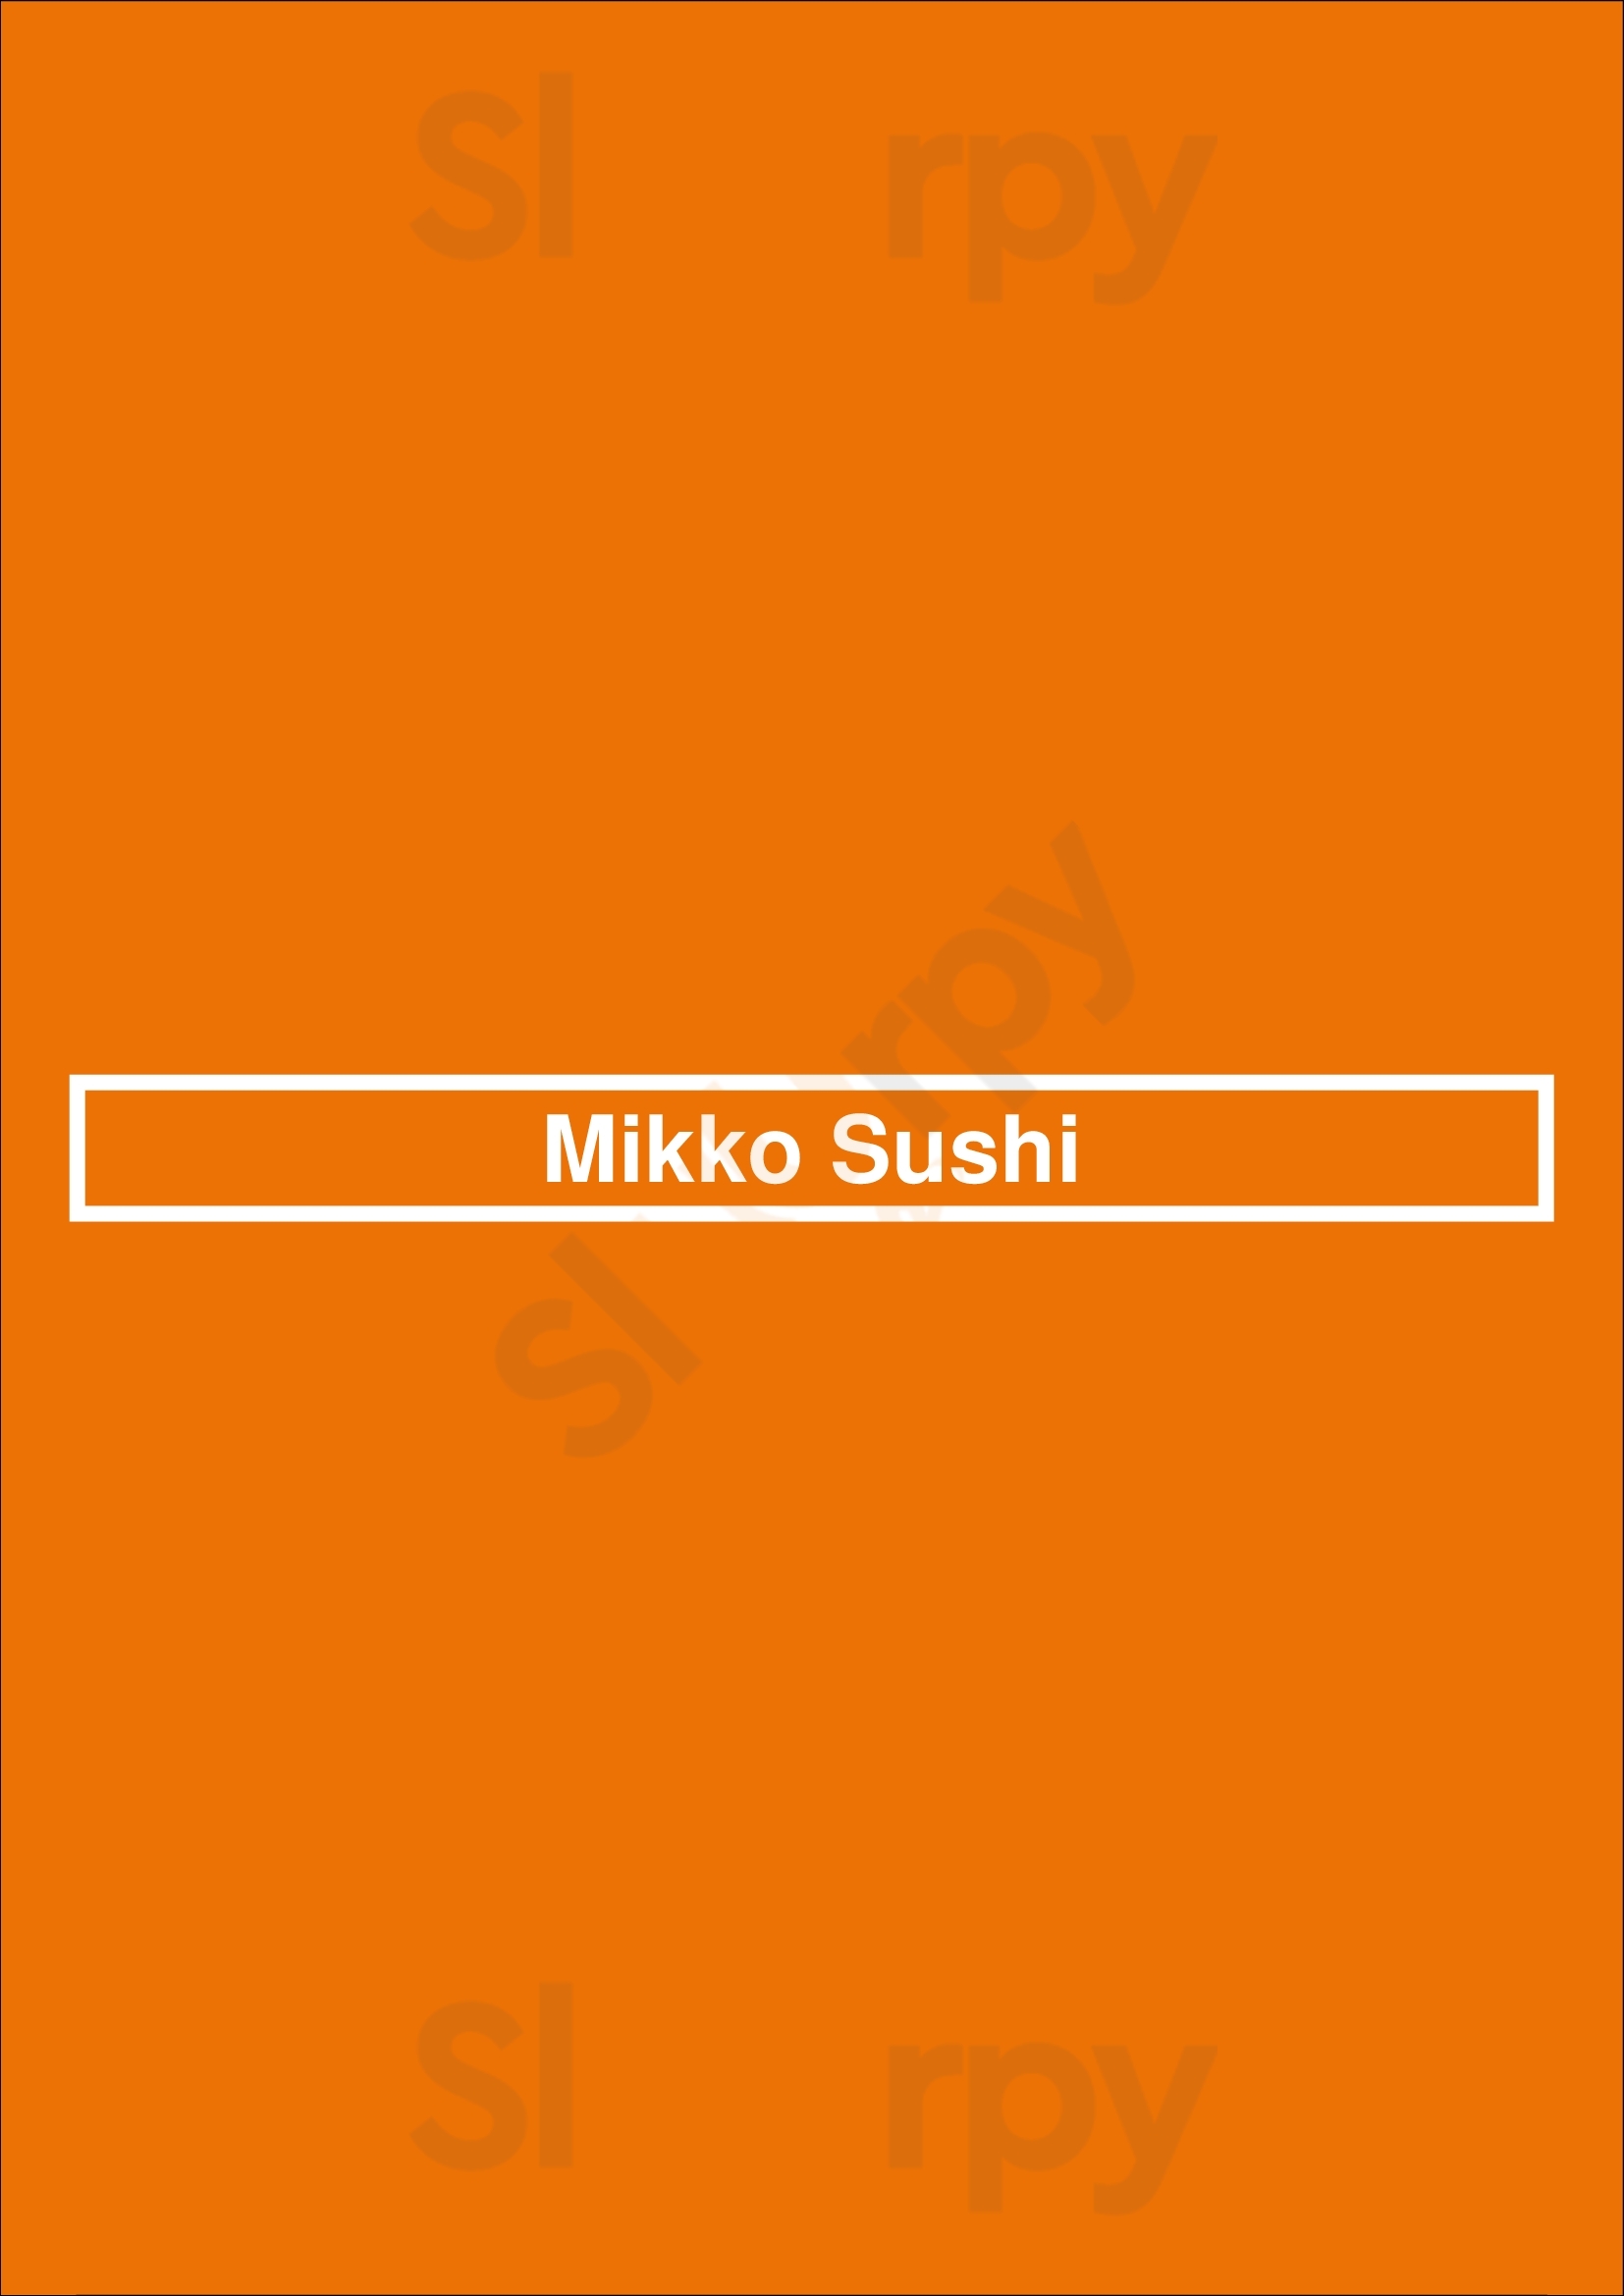 Mikko Sushi Carlsbad Menu - 1